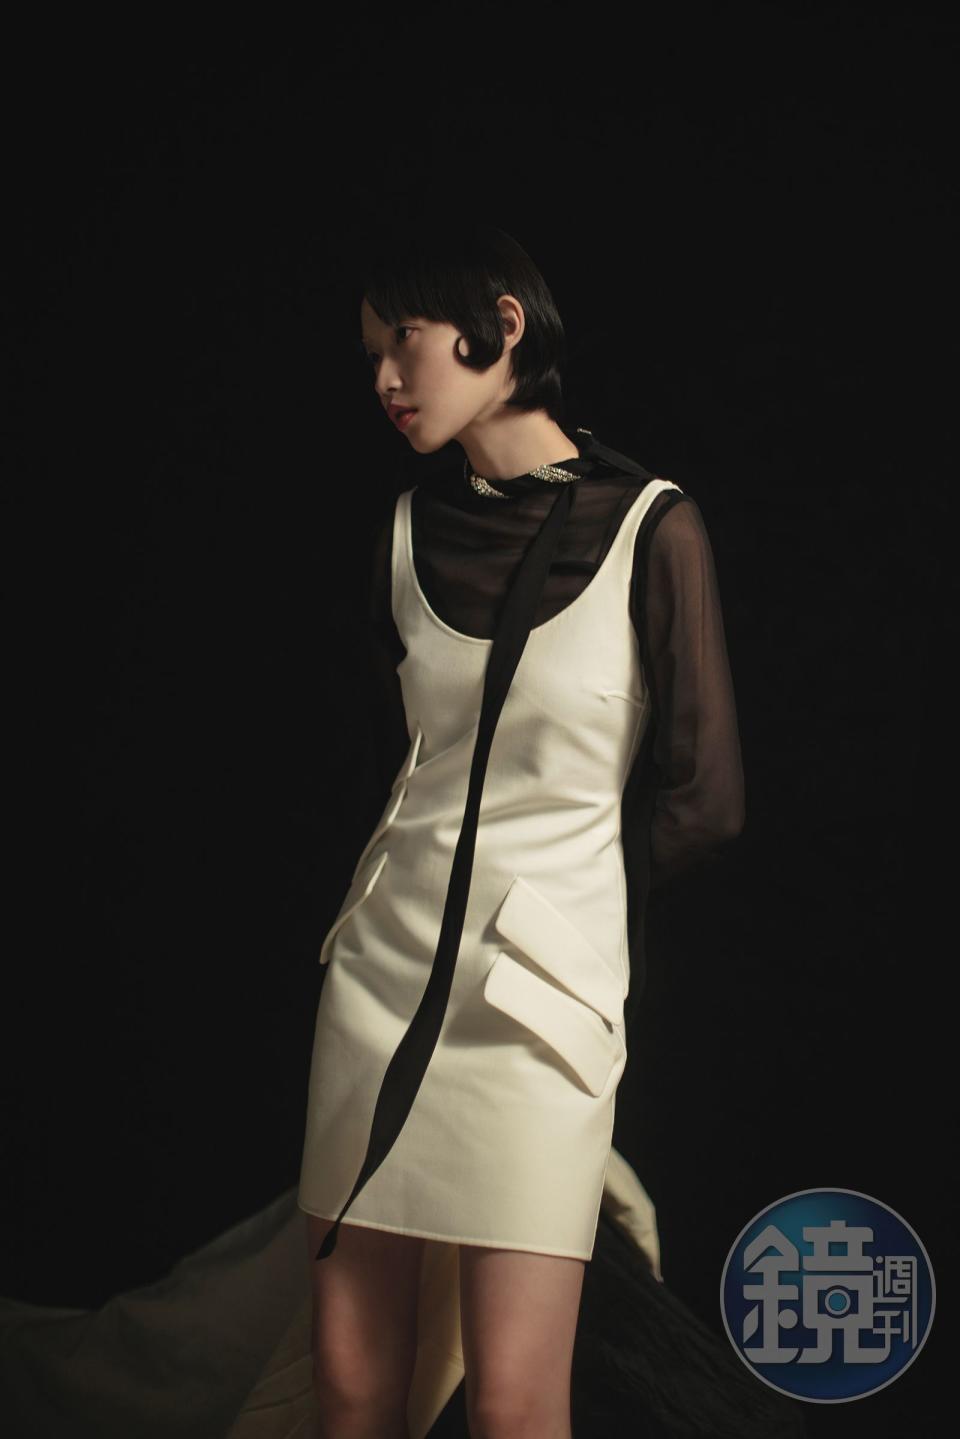 黑色紗質襯衫 NT$92,000 by GUCCI；白色短洋裝 NT$33,000 by VERSACE。